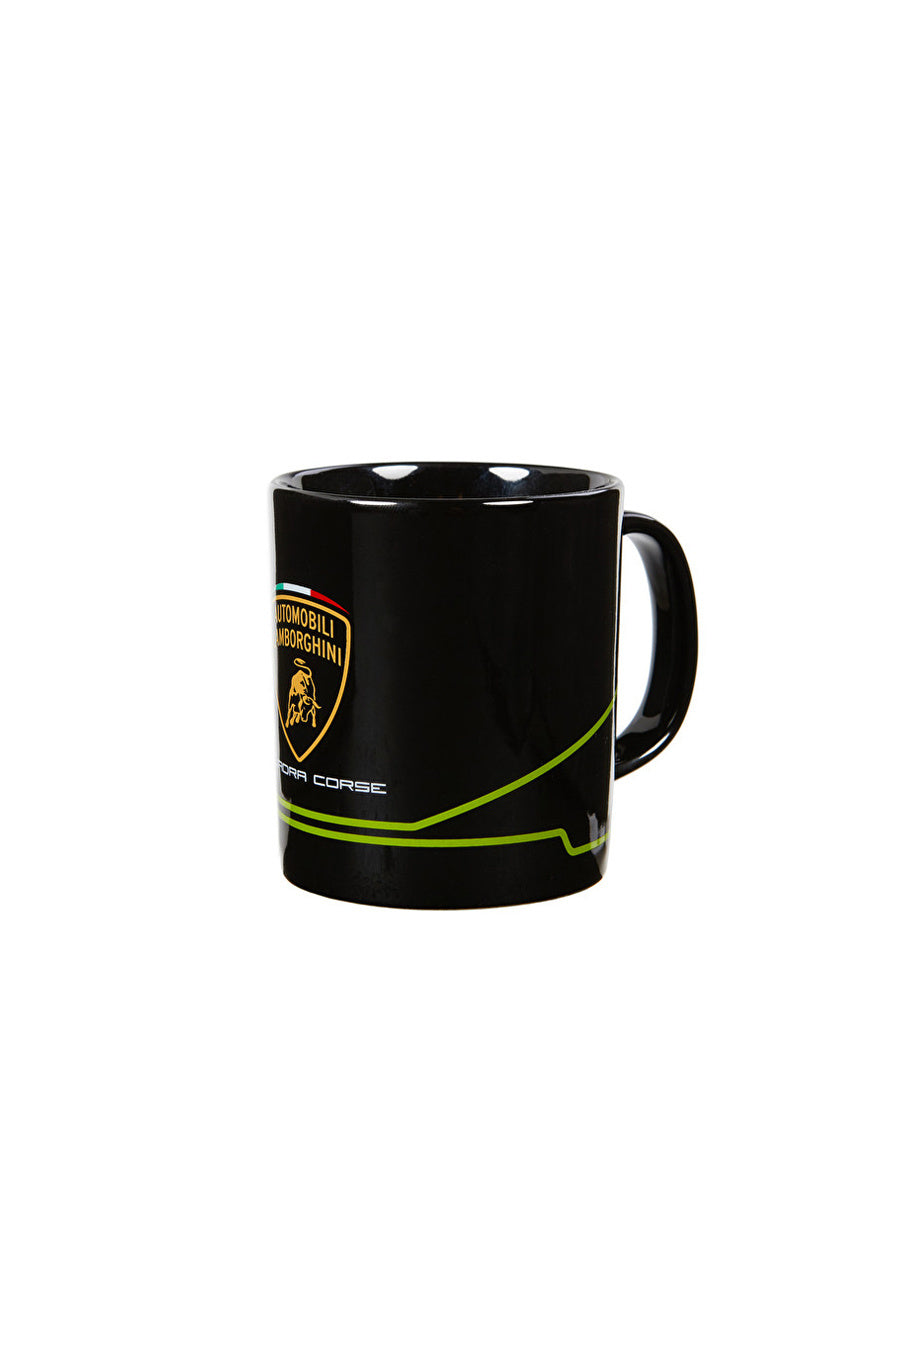 Lamborghini Mug, Take a lot, F1 accessories, Branded mugs, south africa accessories, mugs, Bentley mug, F1 mugs, F1 cups